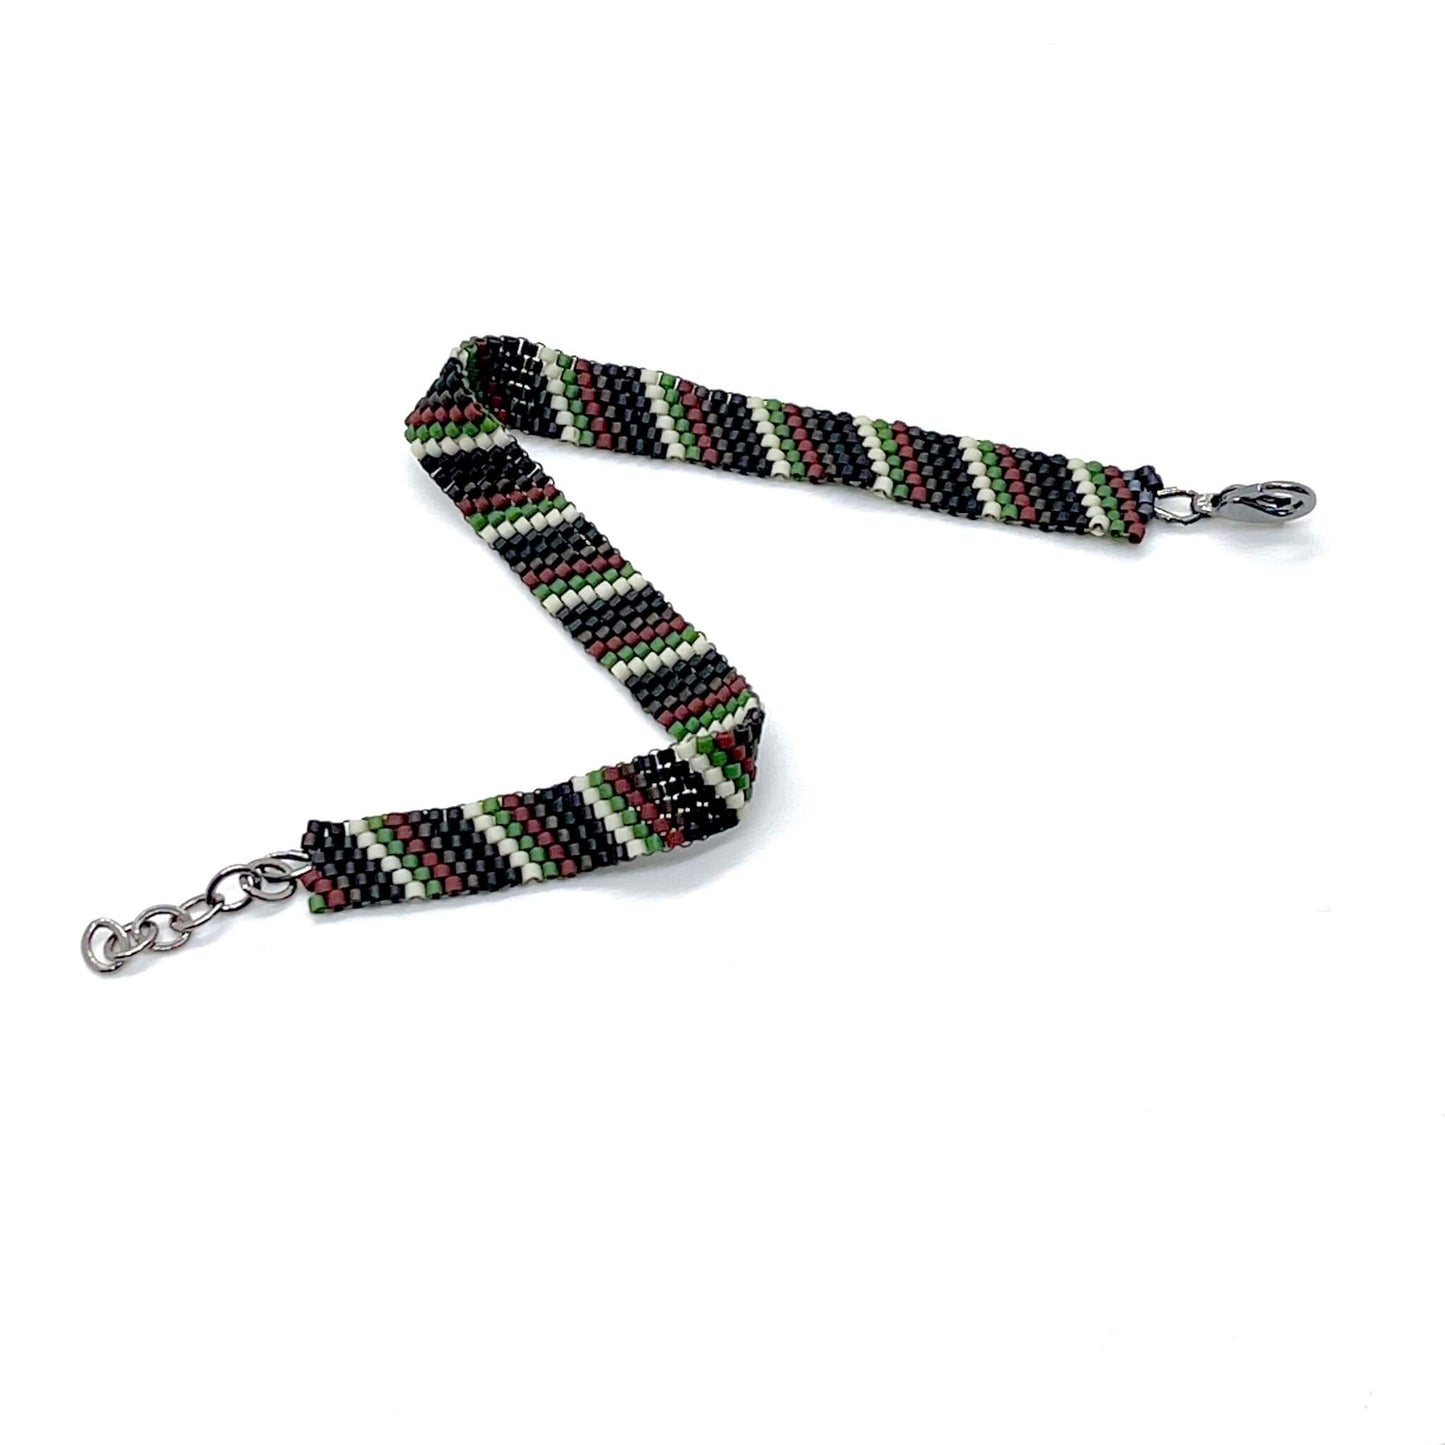 Men's woven bracelet/brown and green bracelet with candy stripes/flat beaded bracelet.